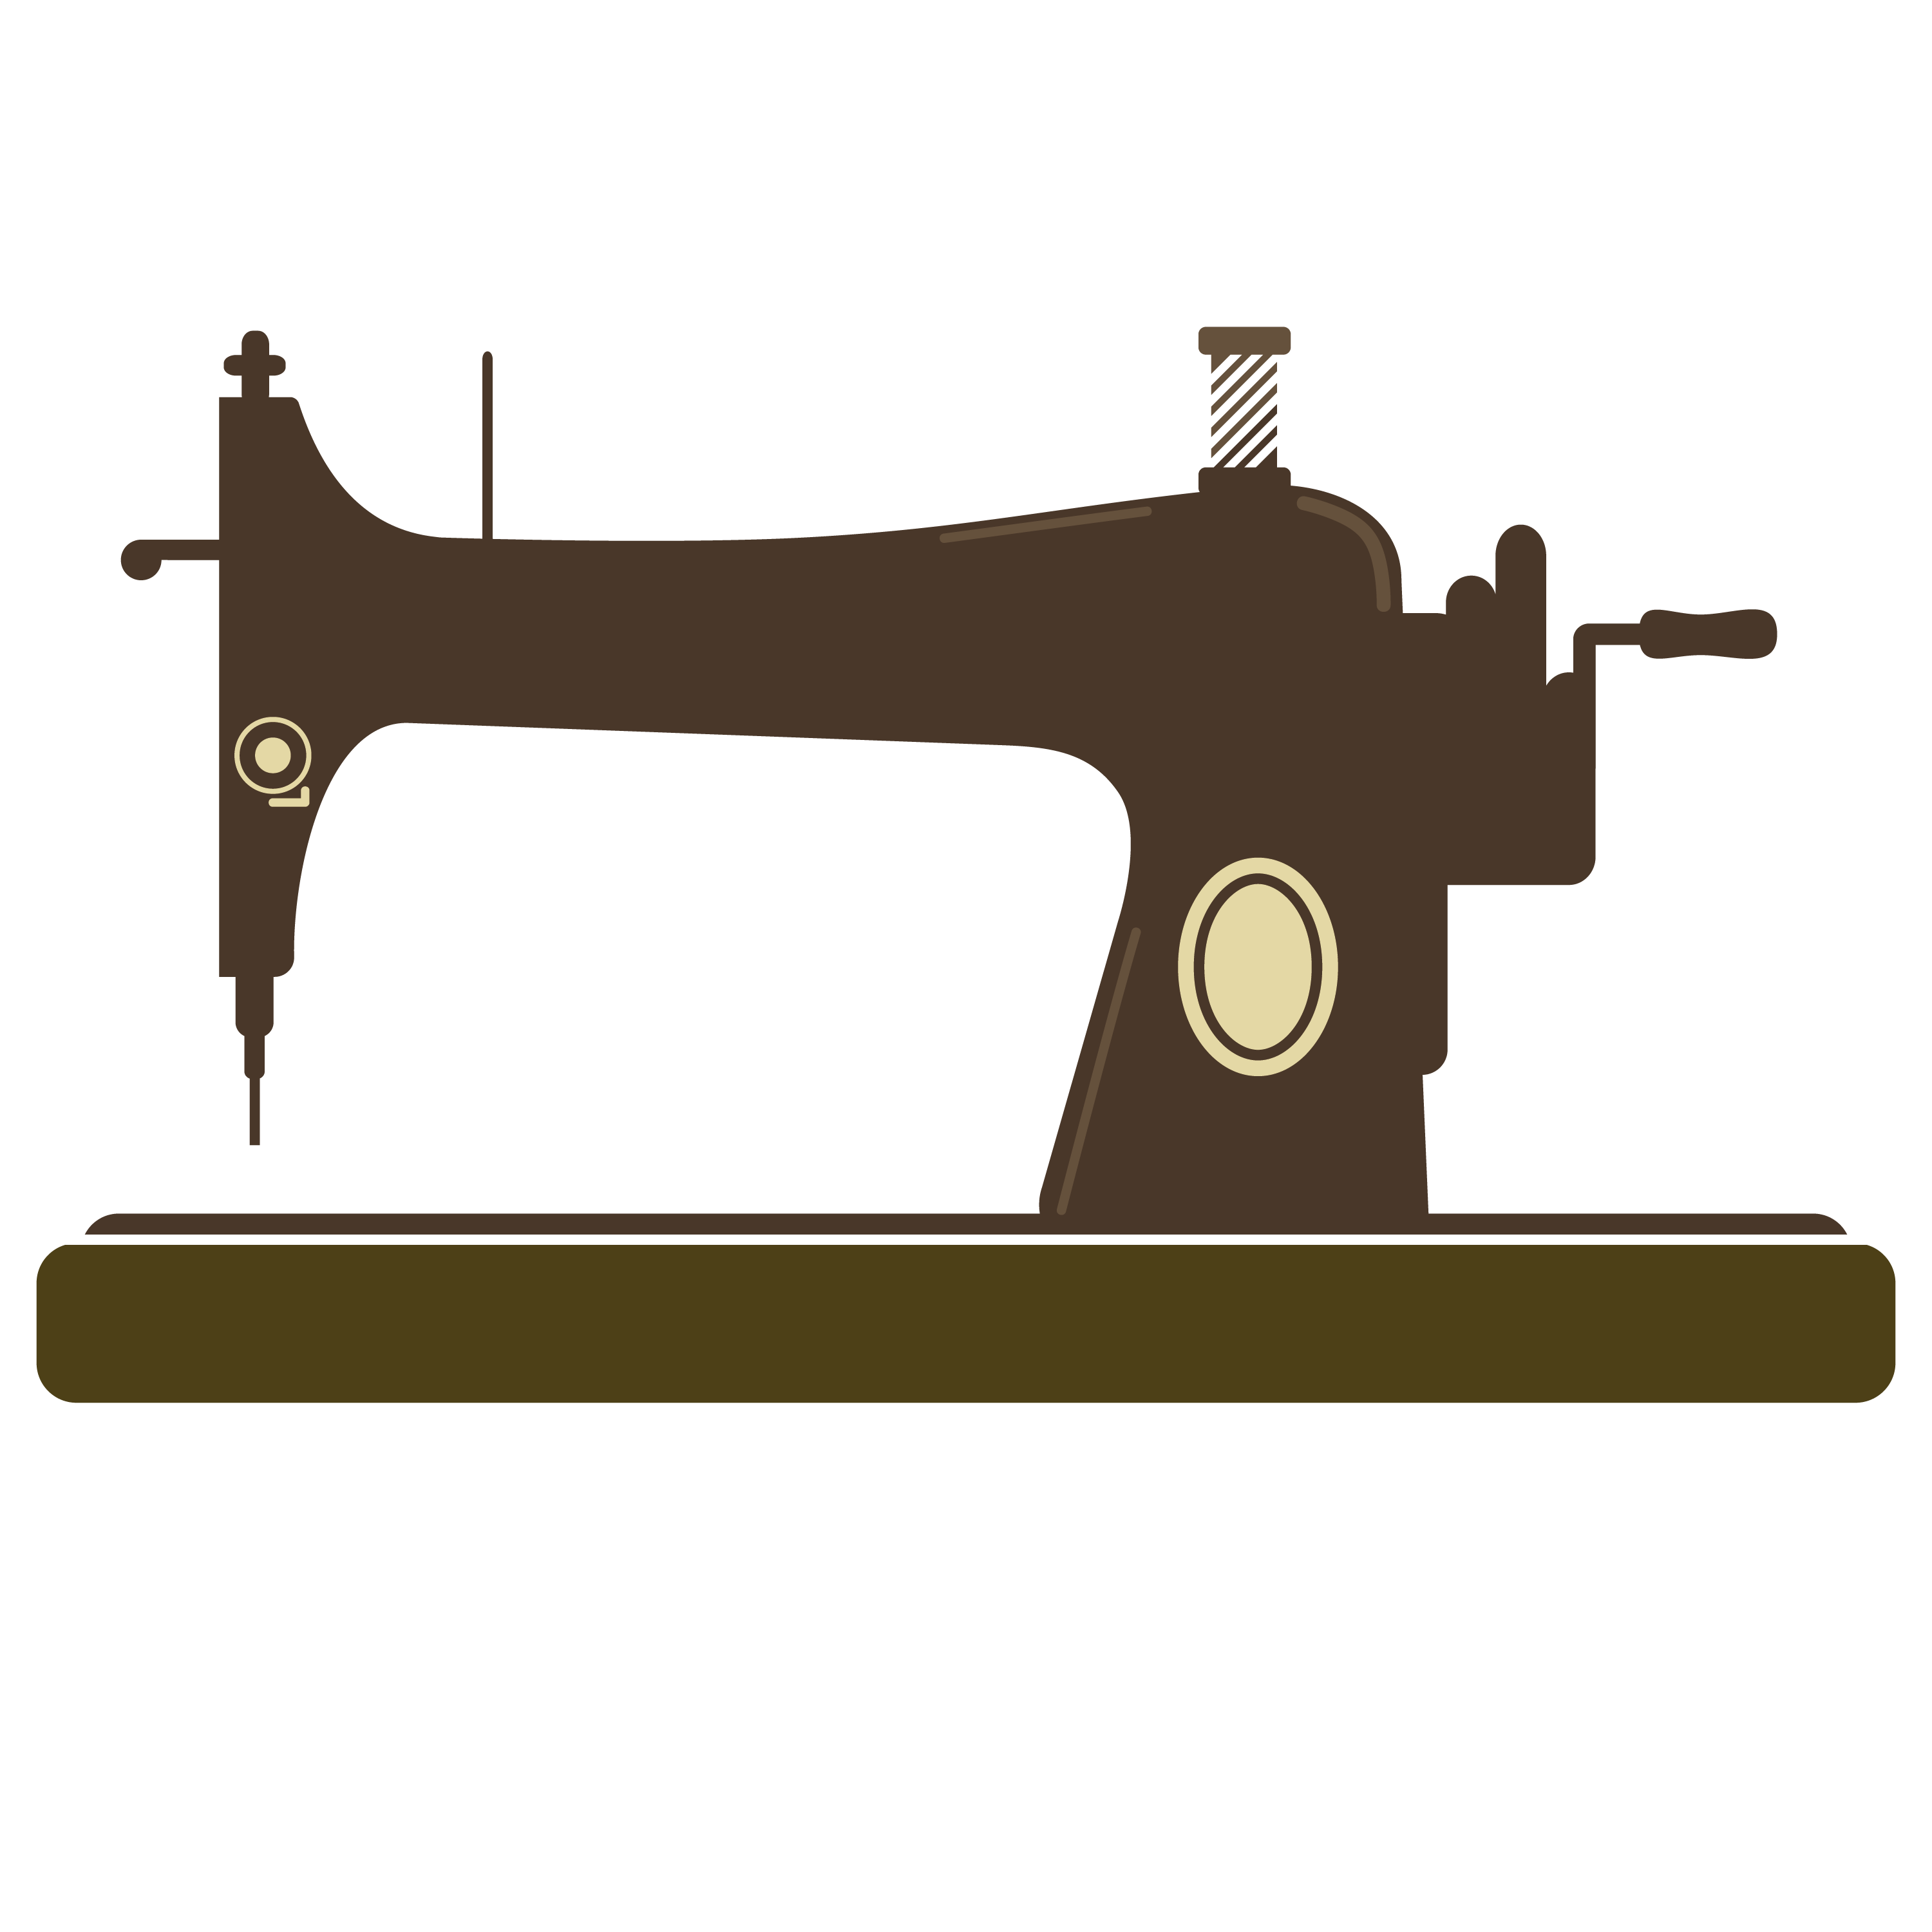 Clip art sewing machine; Sewing Machine Clip Art - clipartall ...